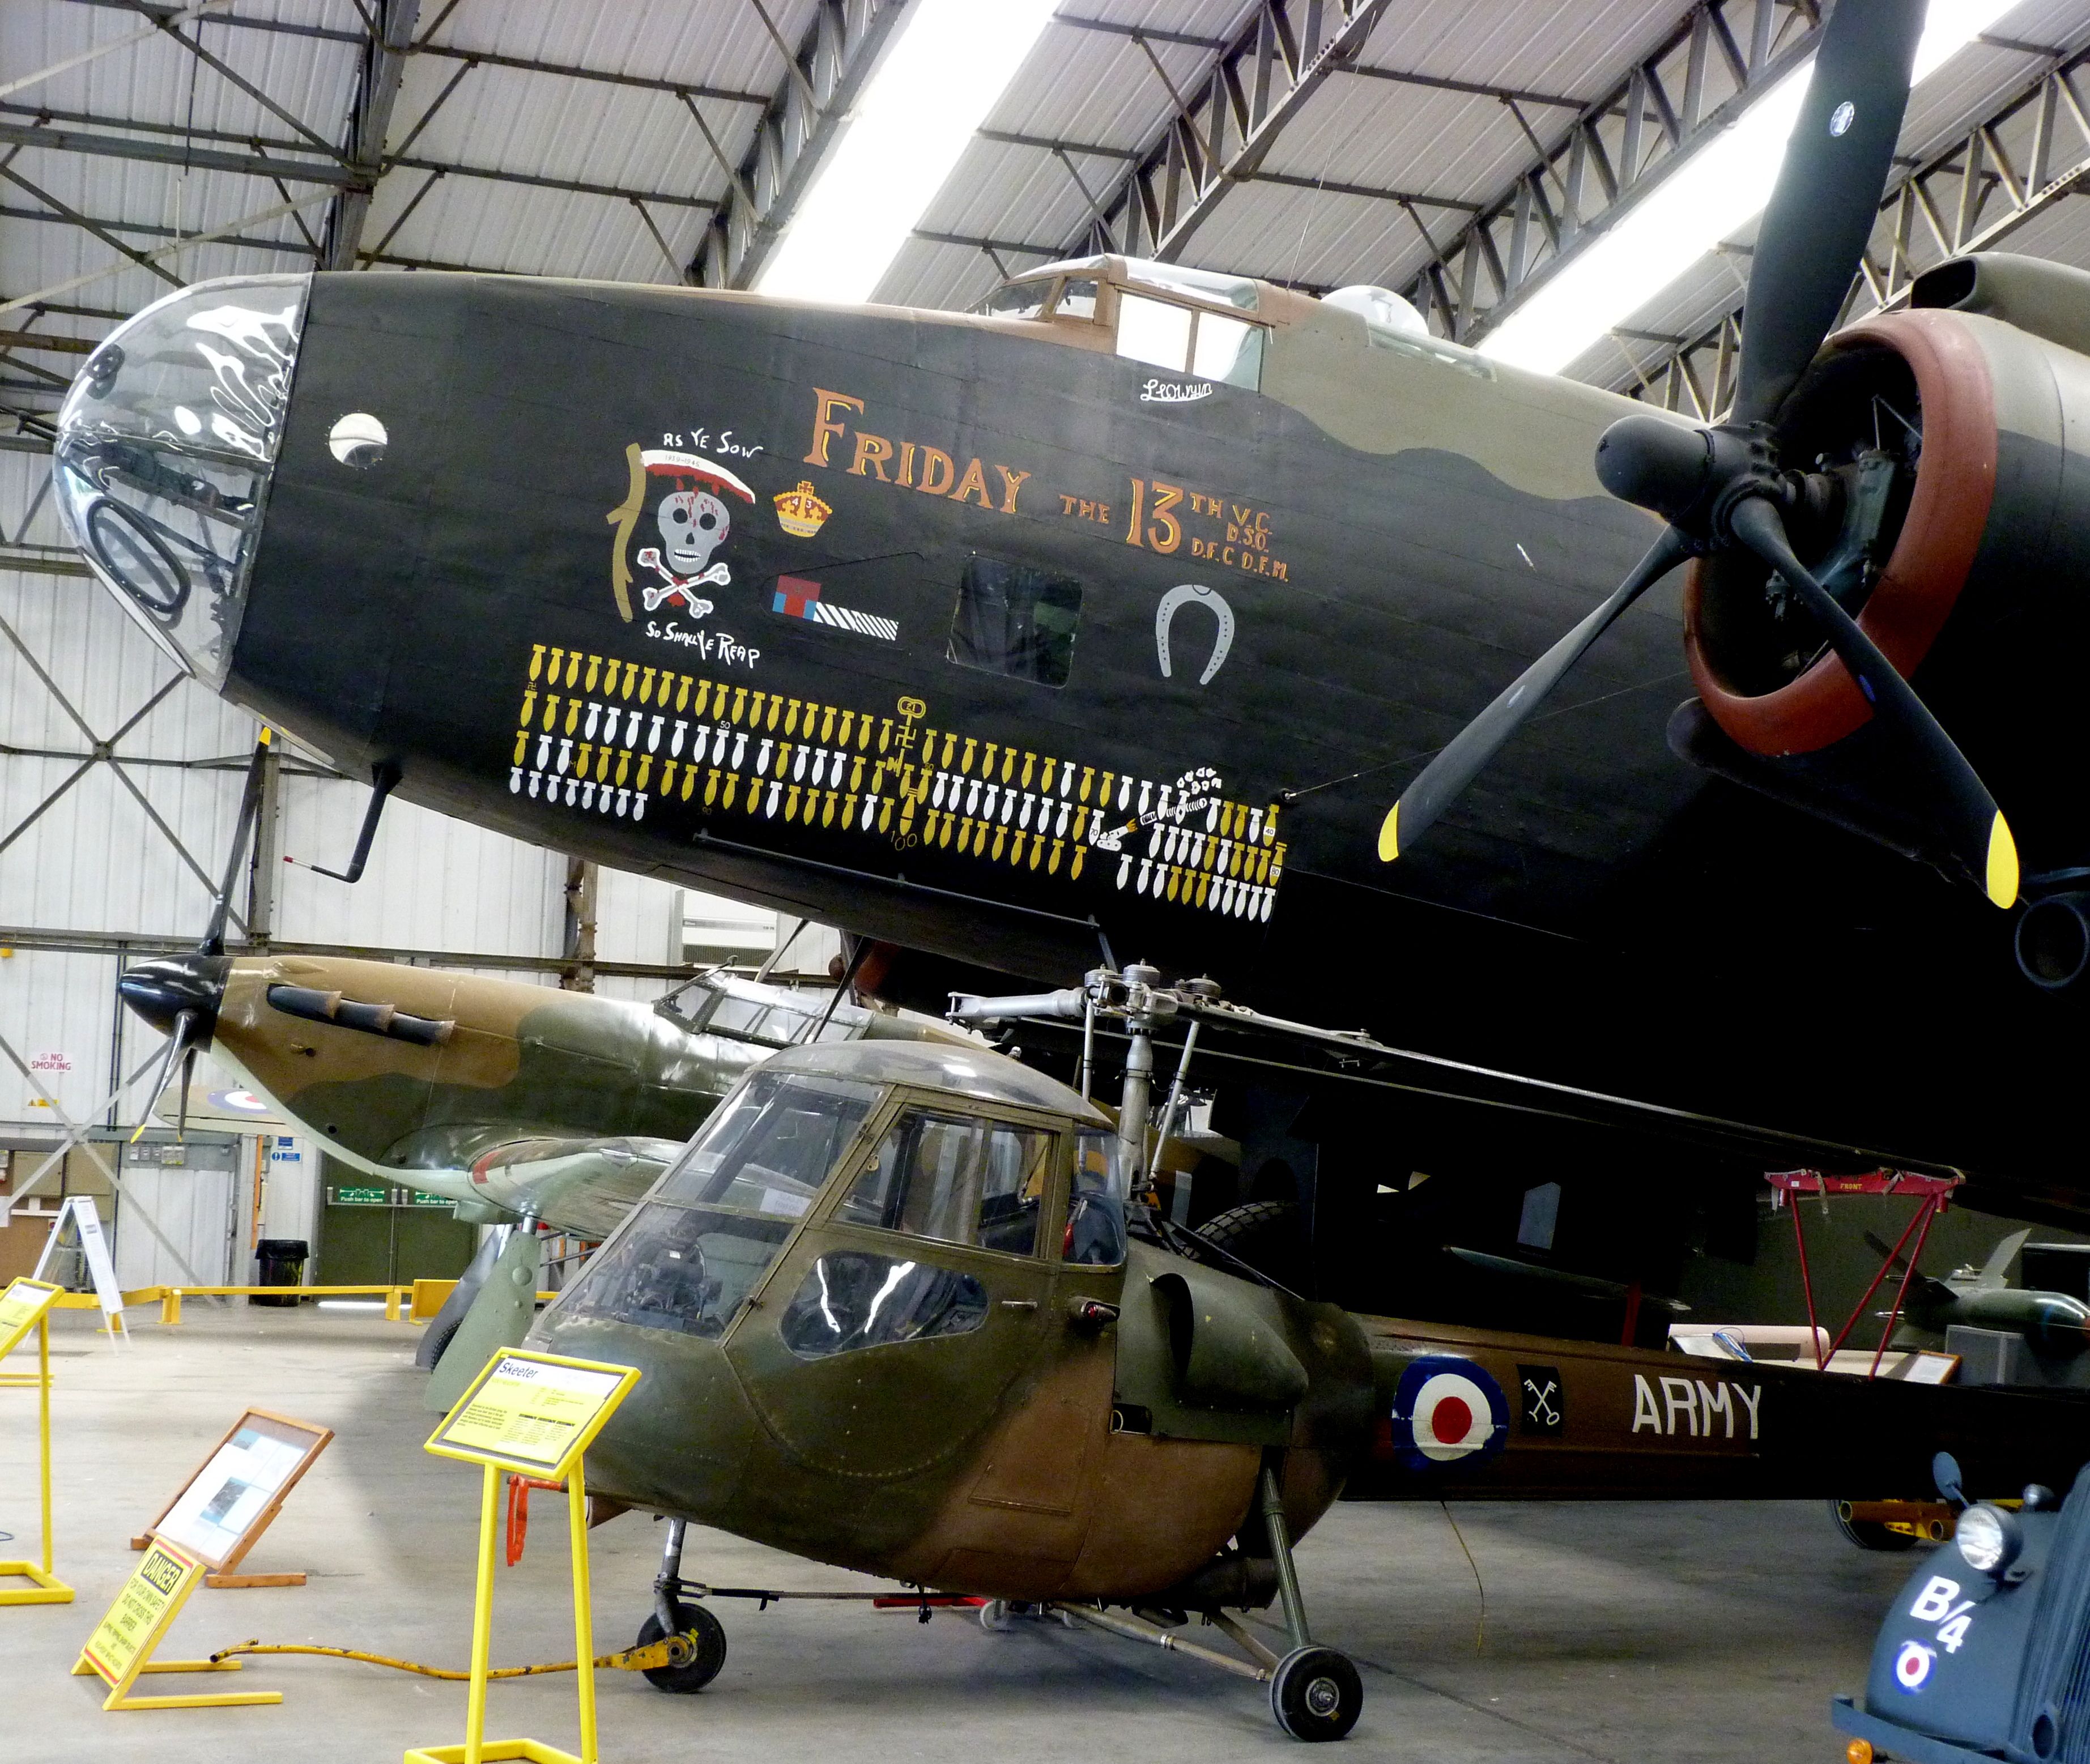 Handley Page Halifax bomber aircraft on display.